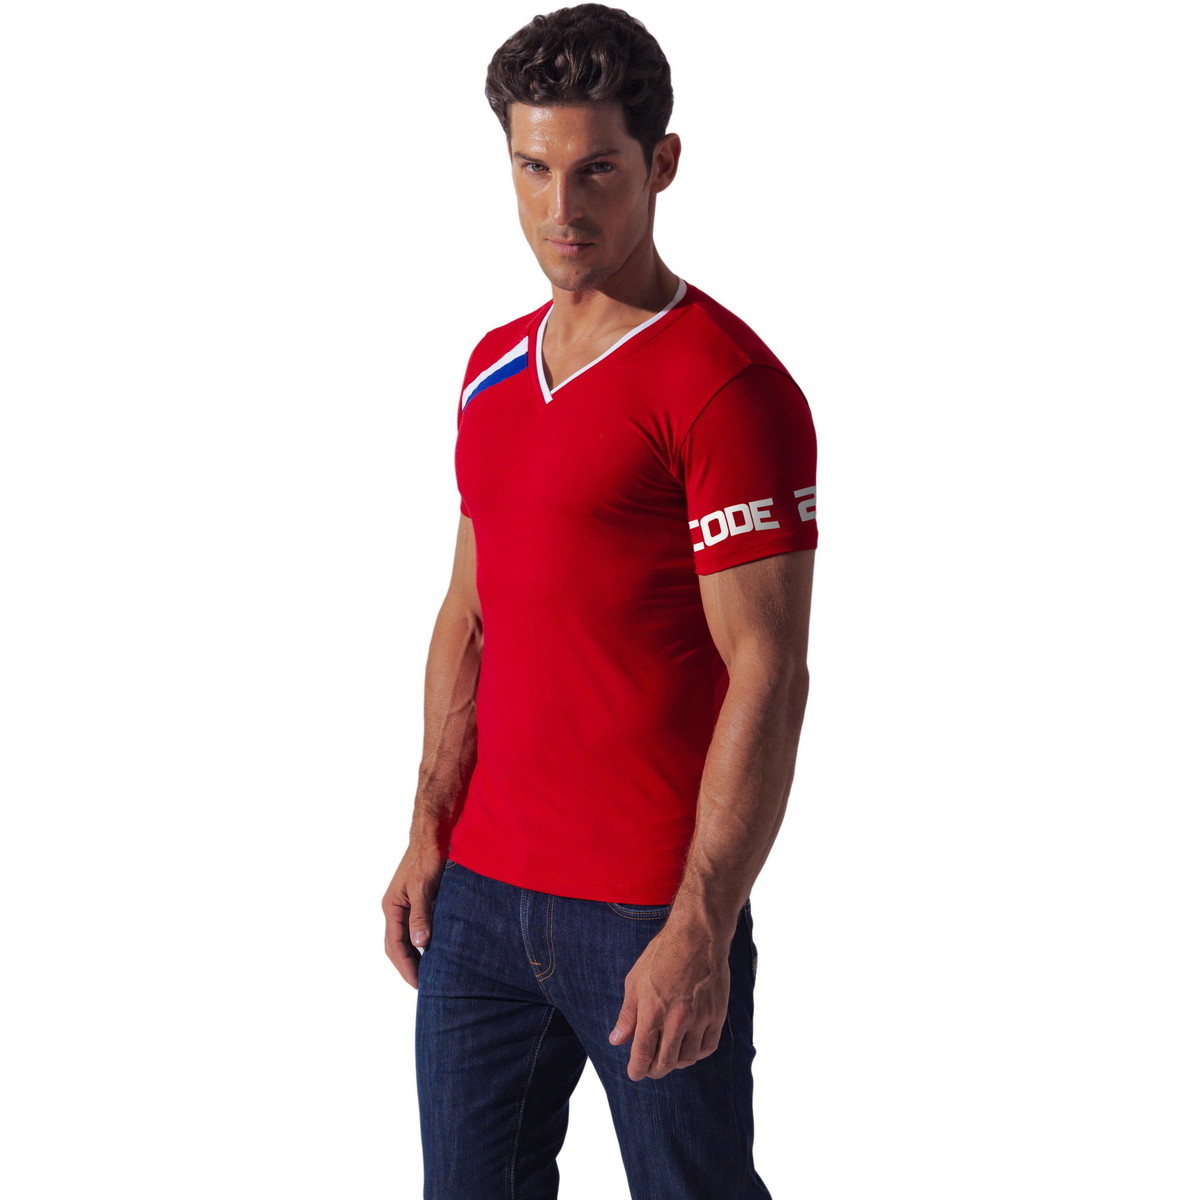 Vêtements Homme Nike Sportswear Mens Longsleeve T-Shirt Code 22 Tee-Shirt Asymmetric sport Code22 Rouge